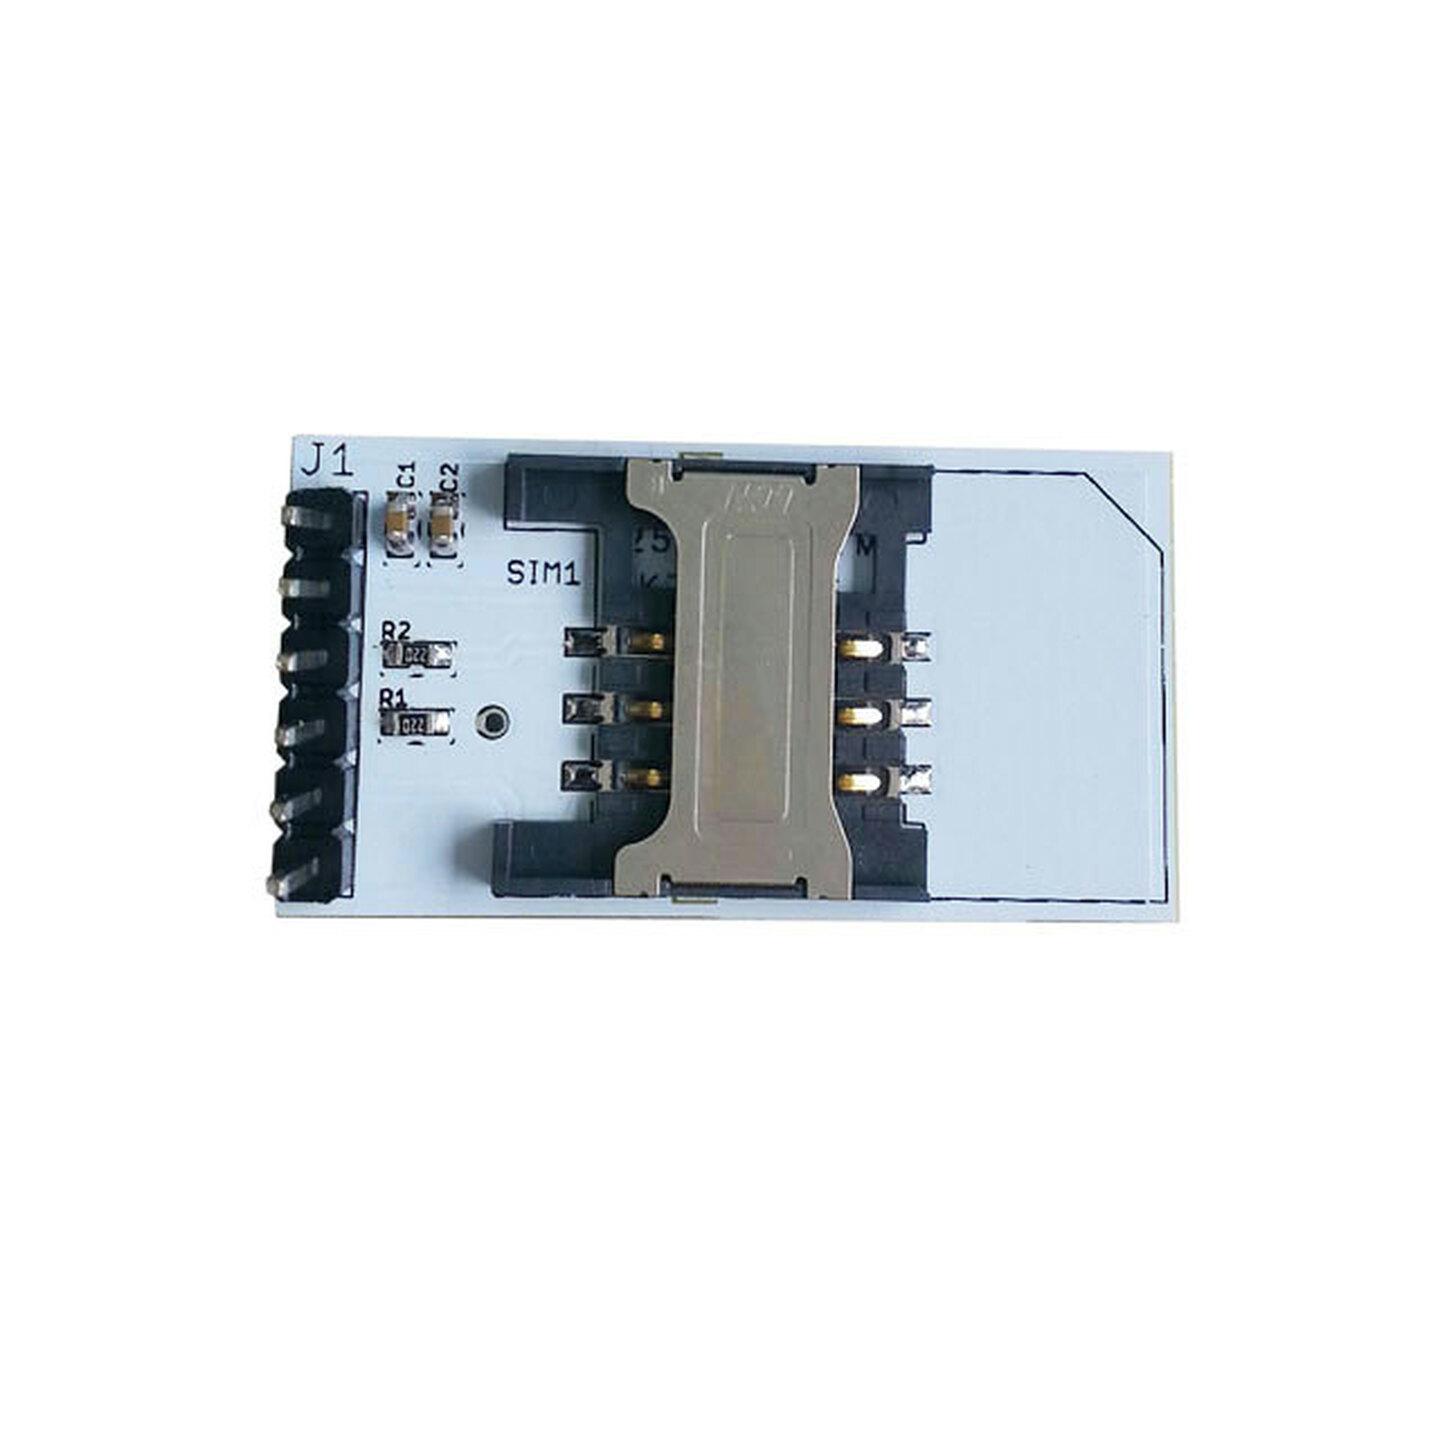 Sim Card Breakout Board for Arduino